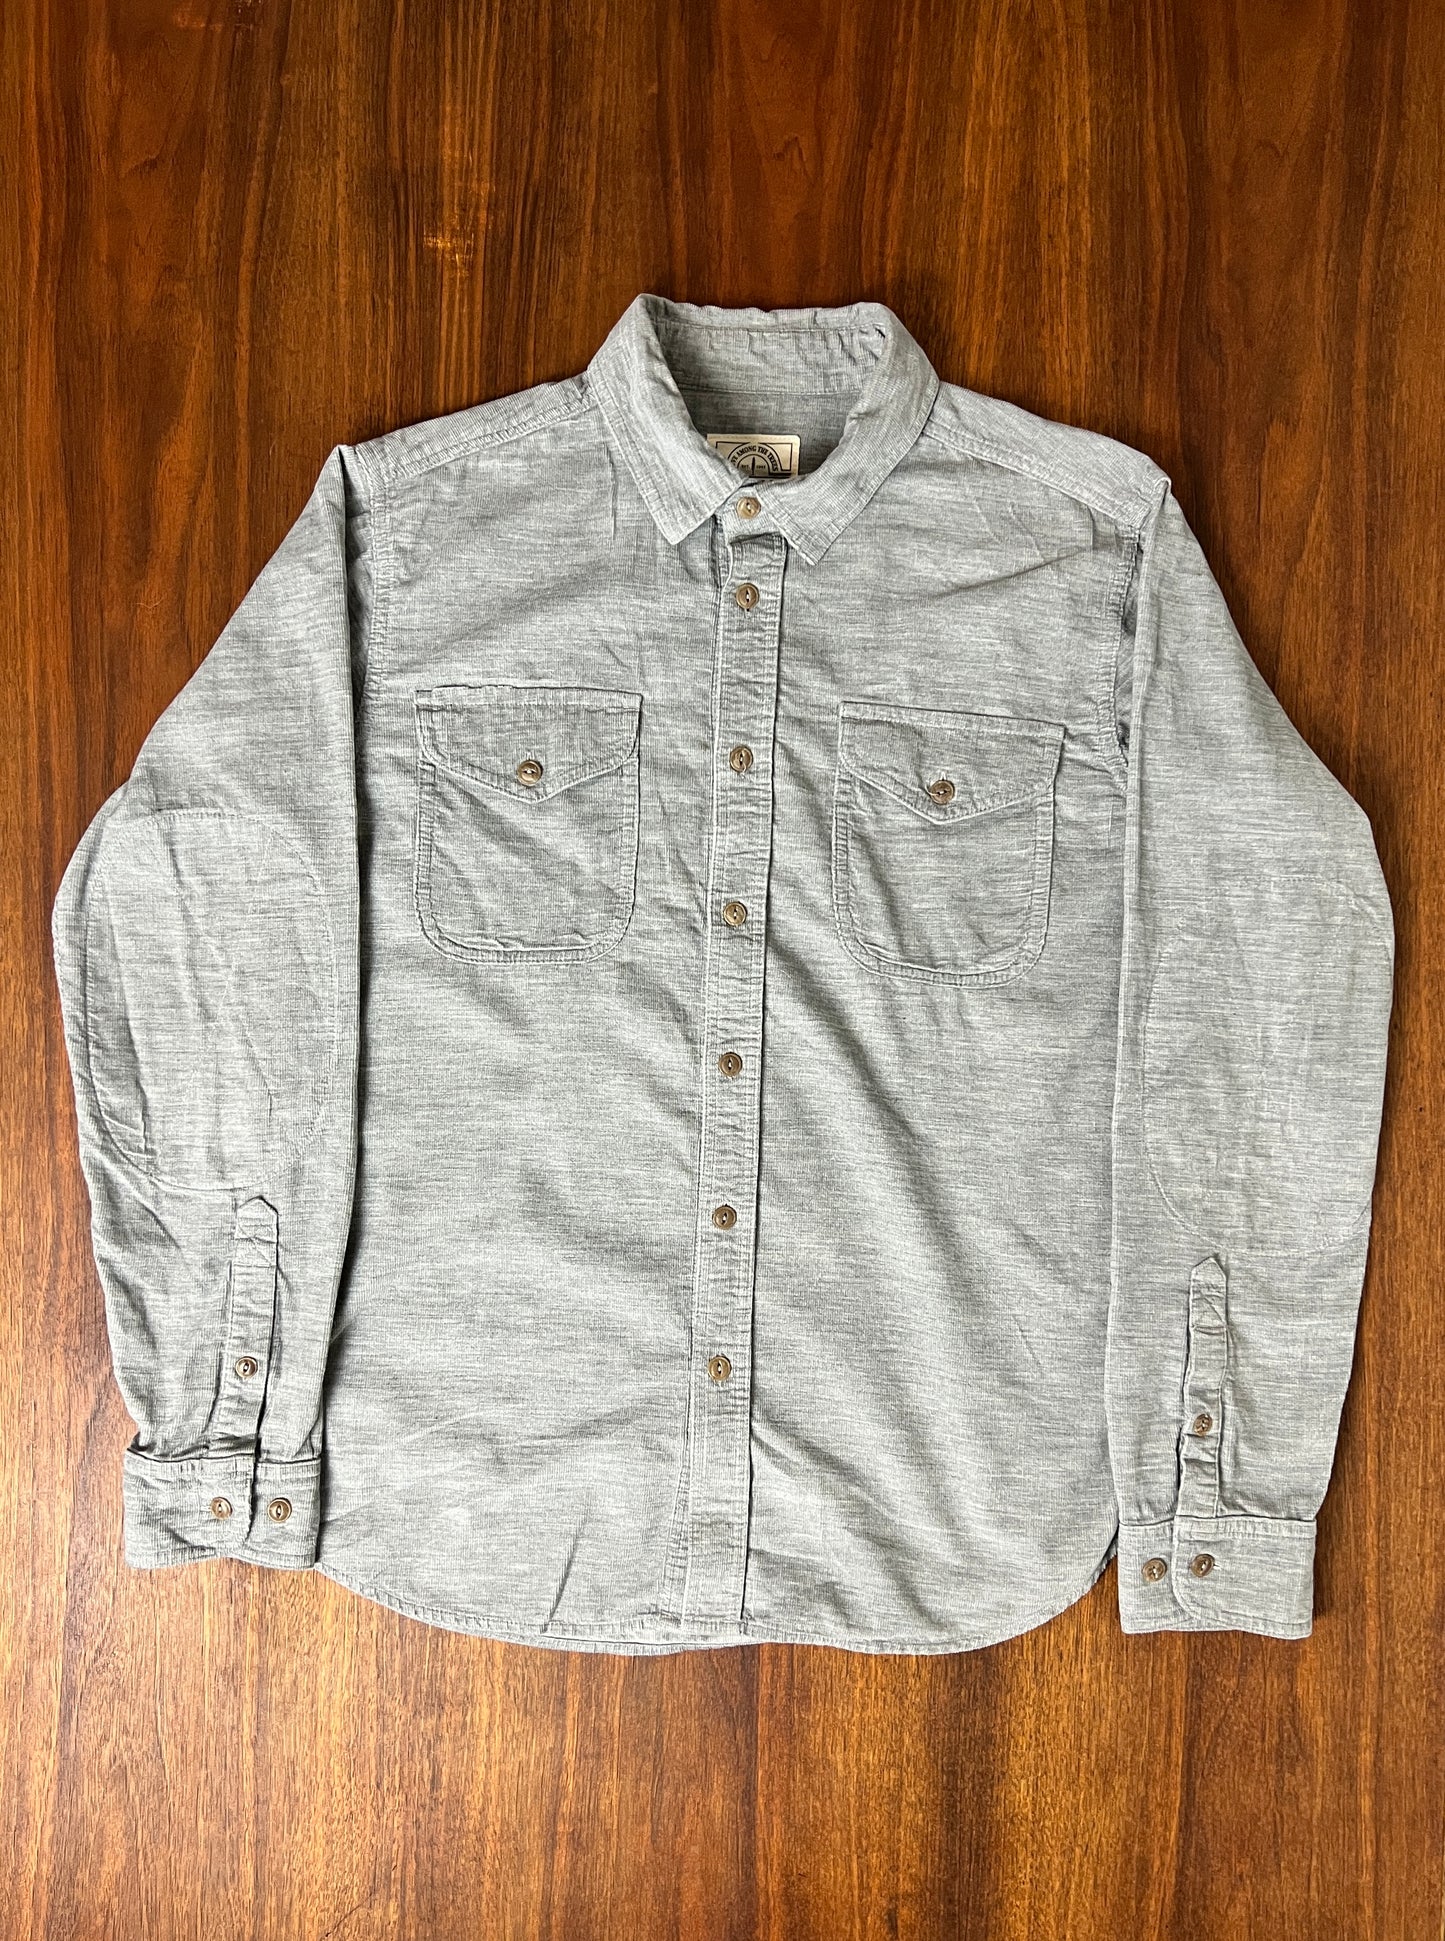 The Grey Corduroy Shirt